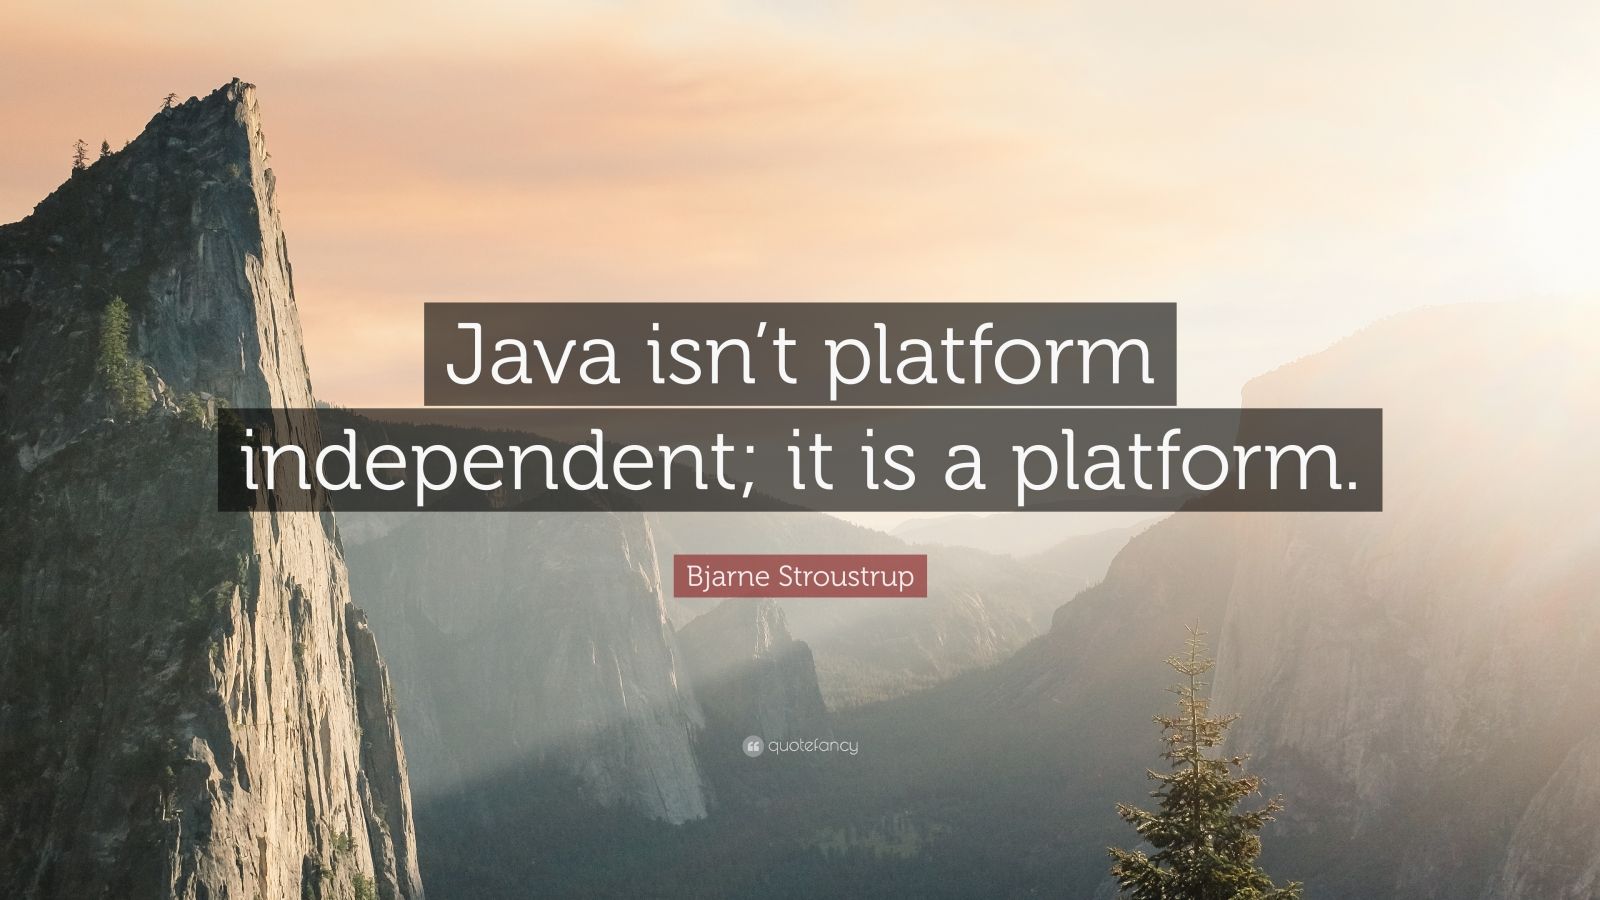 Bjarne Stroustrup Quote: “Java isn’t platform independent; it is a